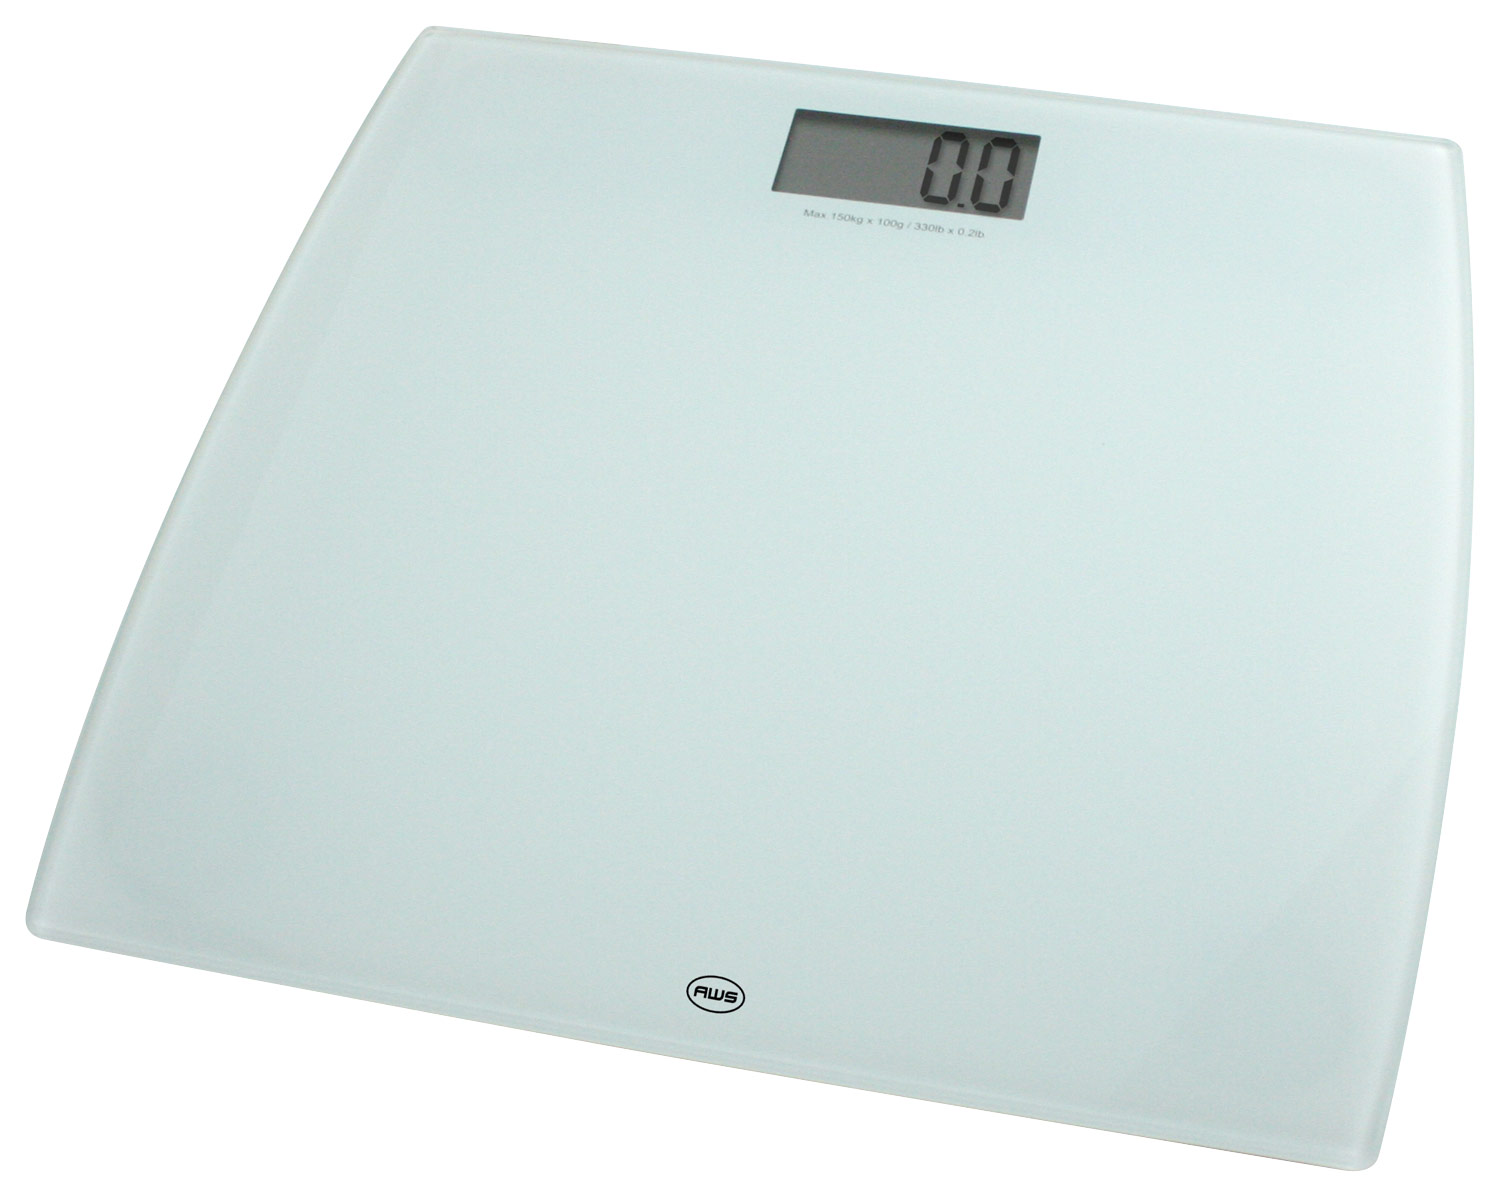 American Weigh Scales Digital Bathroom Scale